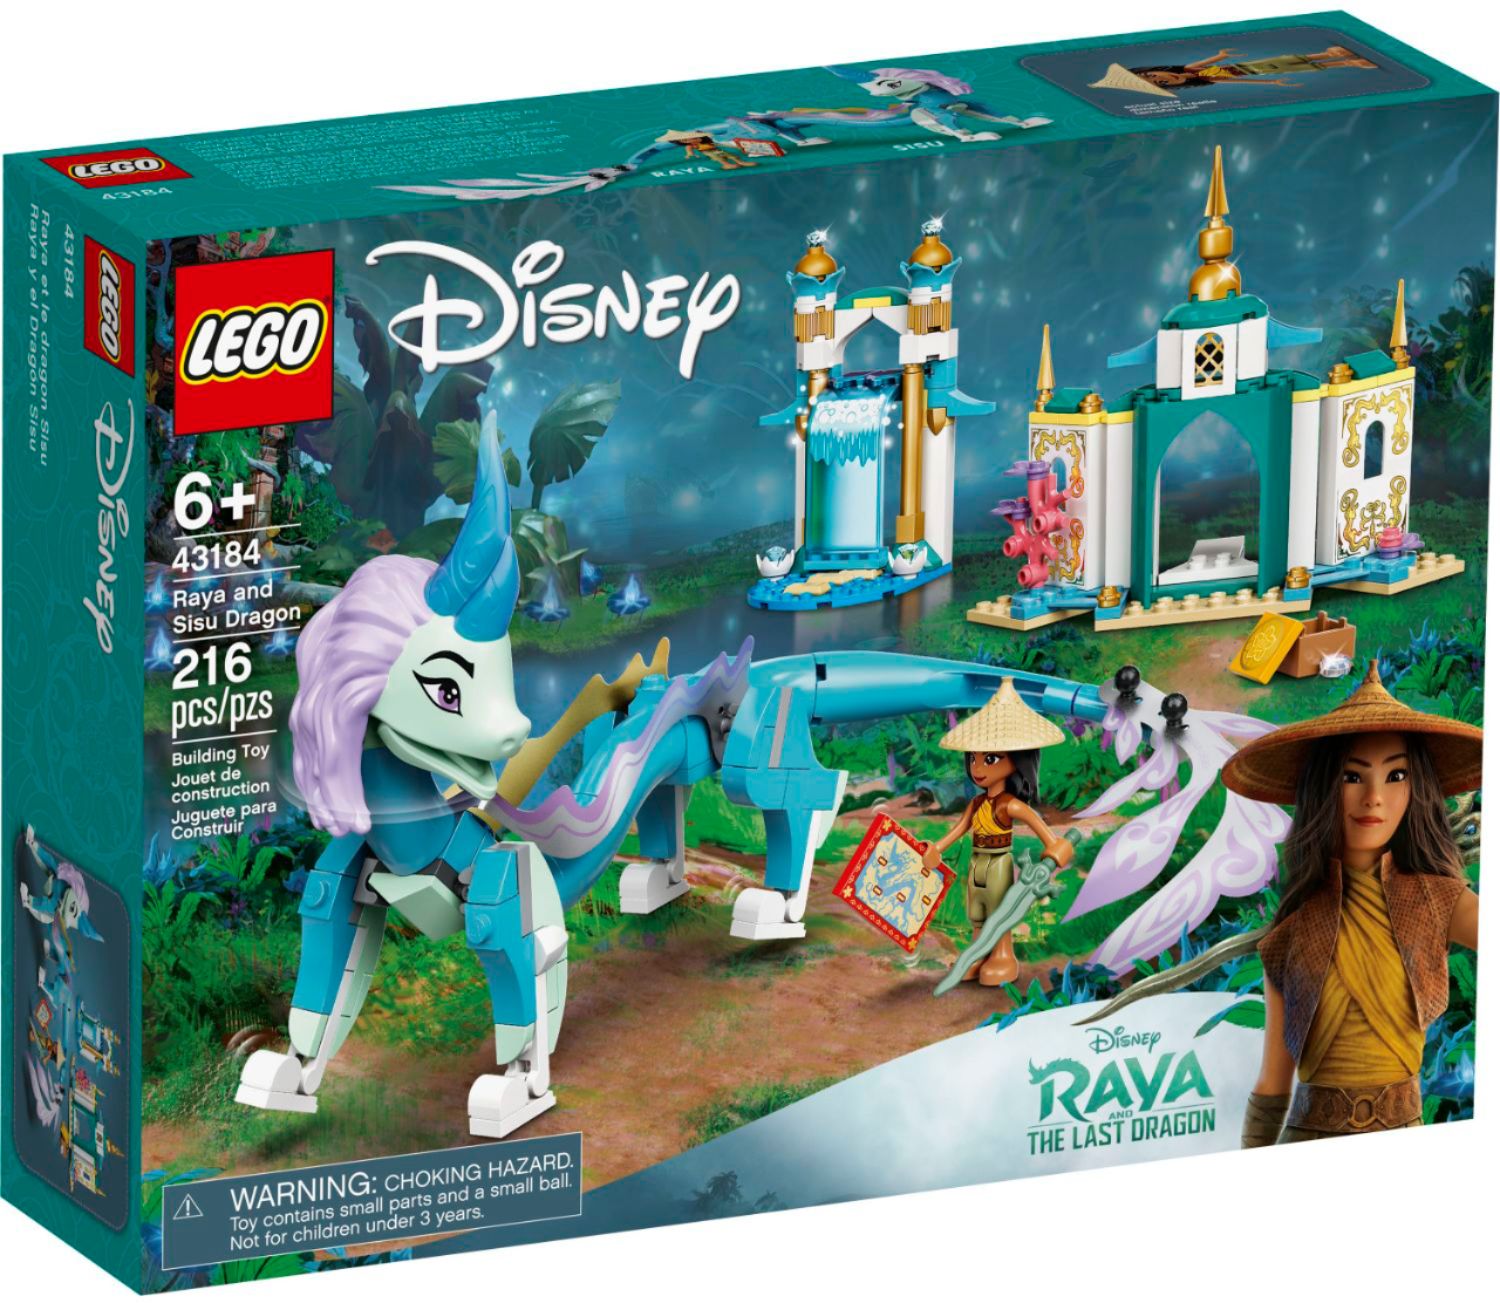 Left View: LEGO Disney Princess Raya and Sisu Dragon 43184